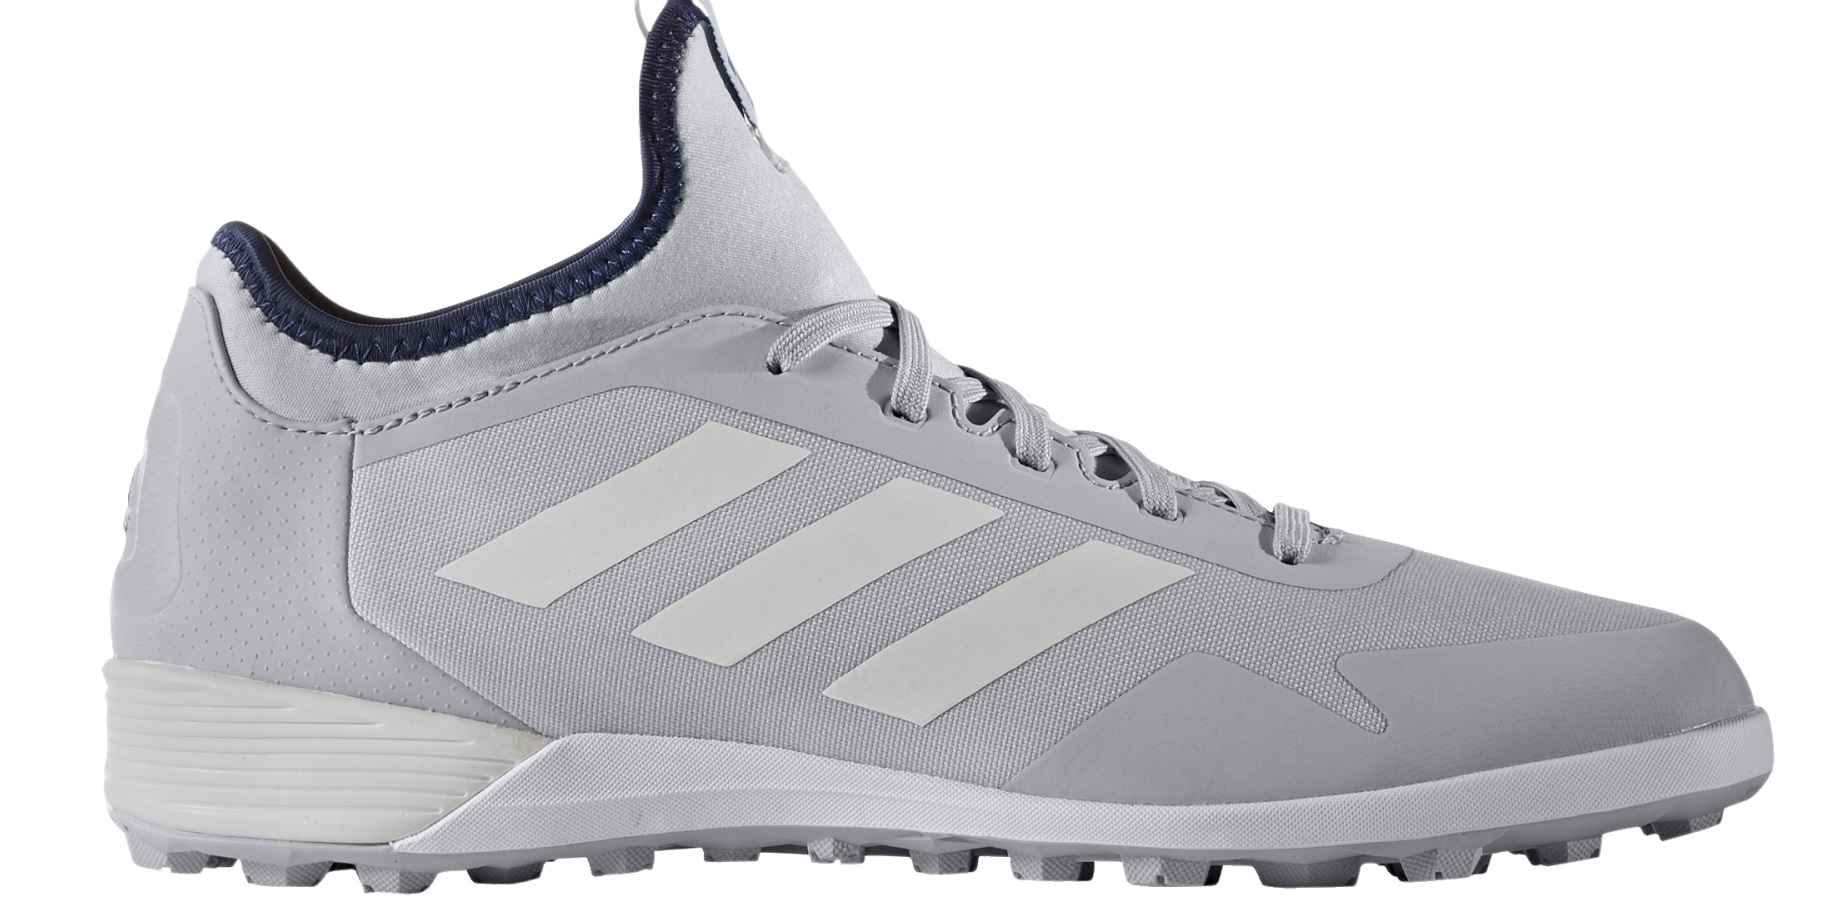 Zapatos de Fútbol Adidas Tango 17.2 TF colore azul blanco - Adidas - SportIT.com